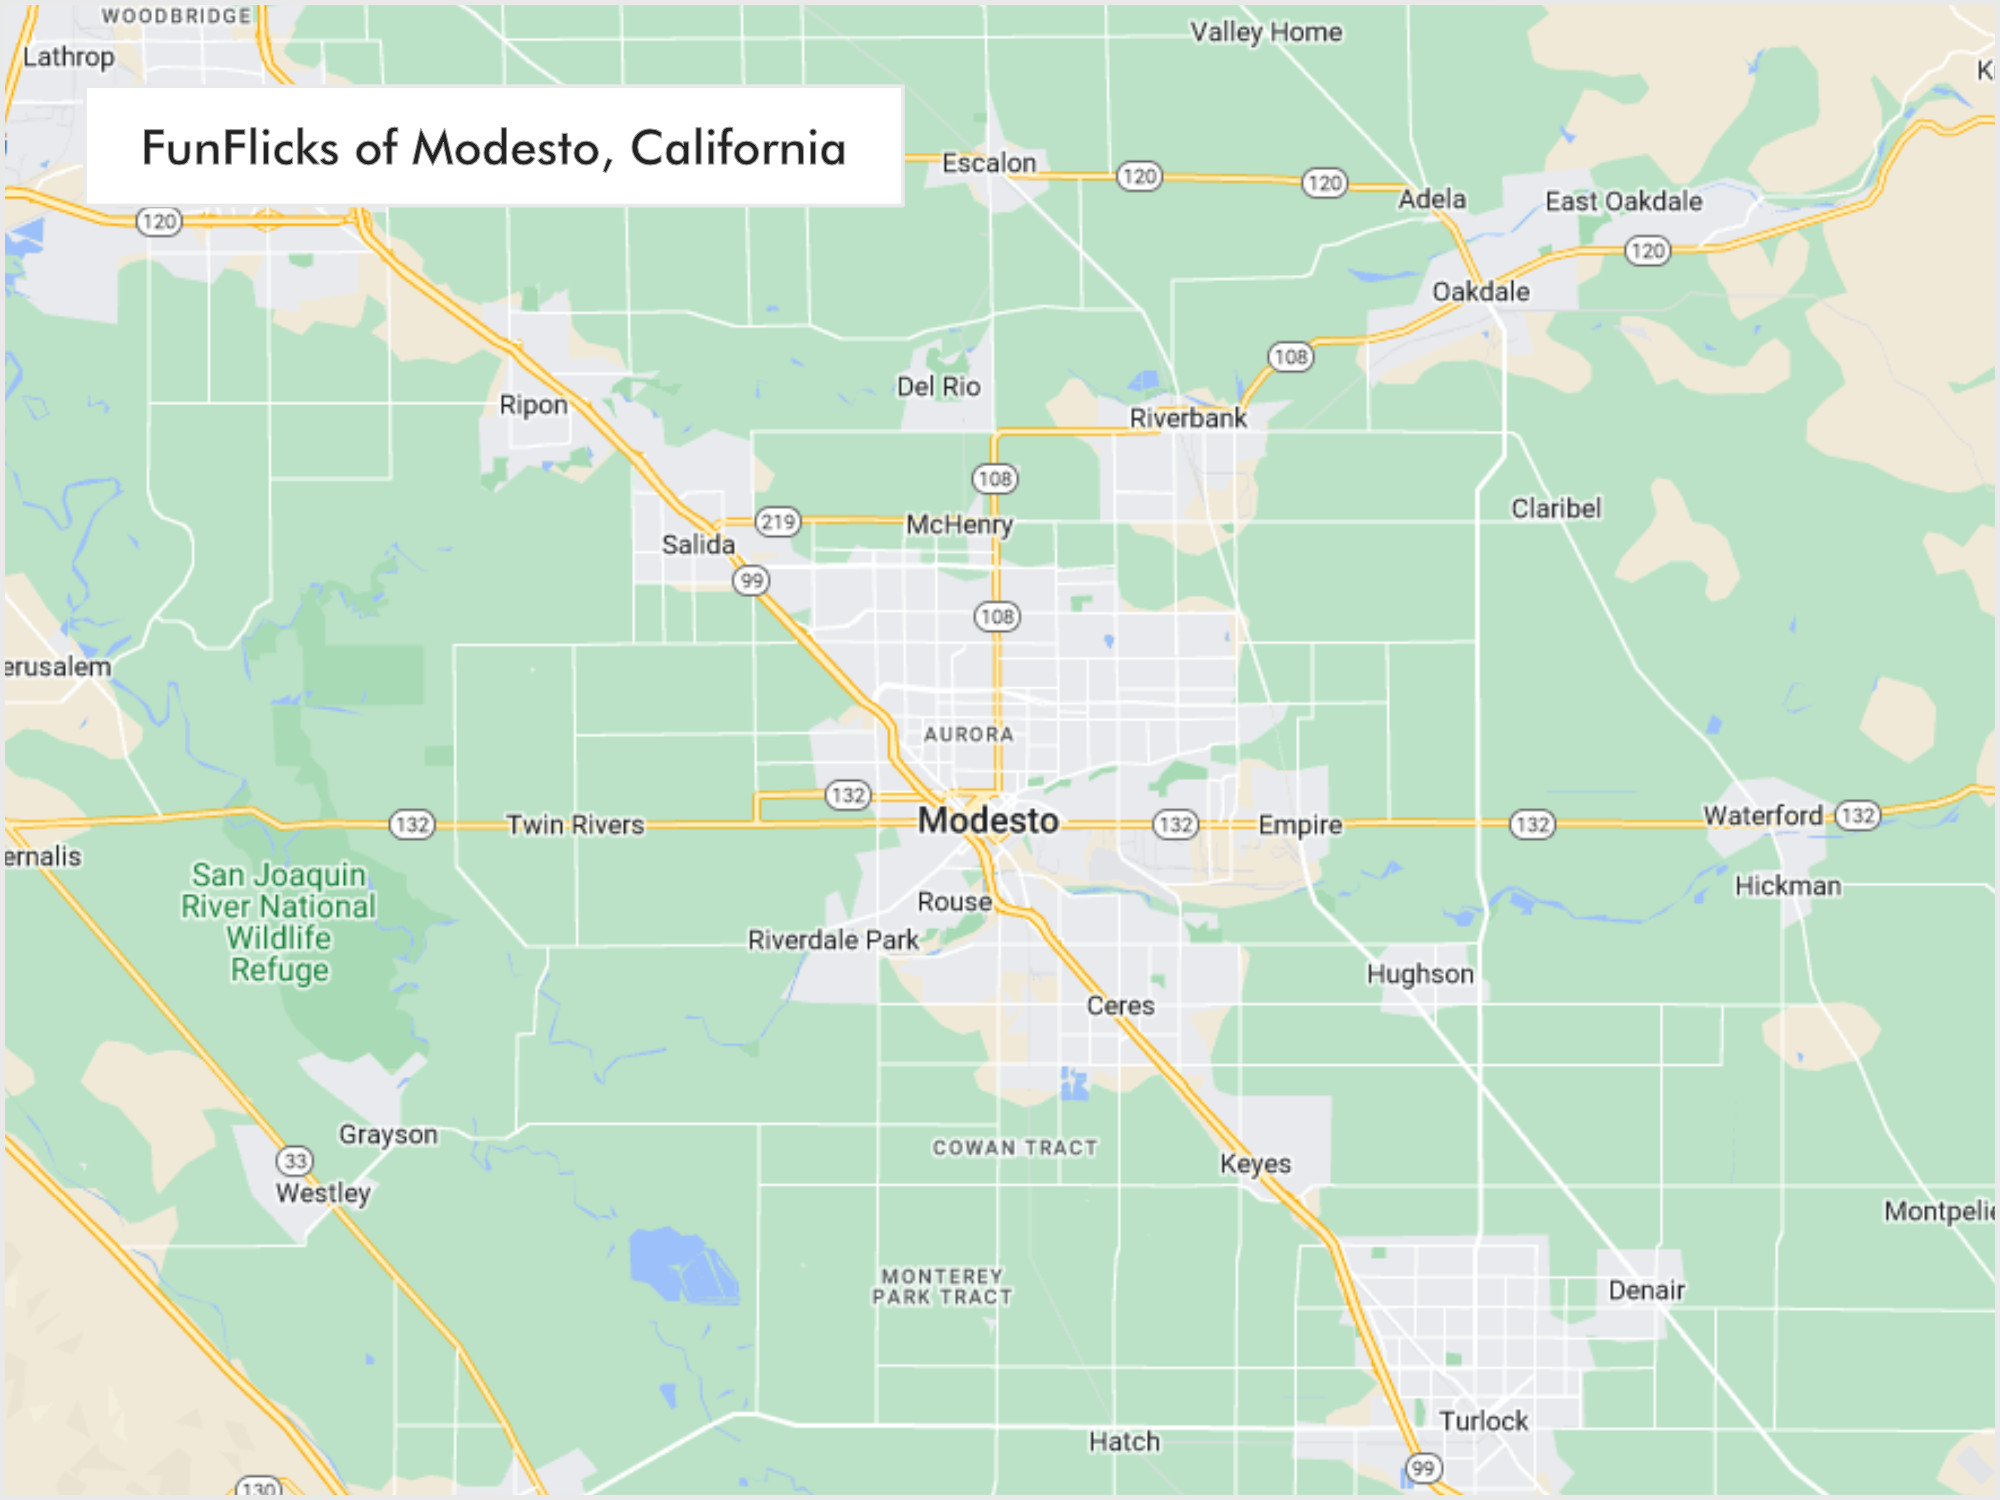 FunFlicks® Modesto territory map